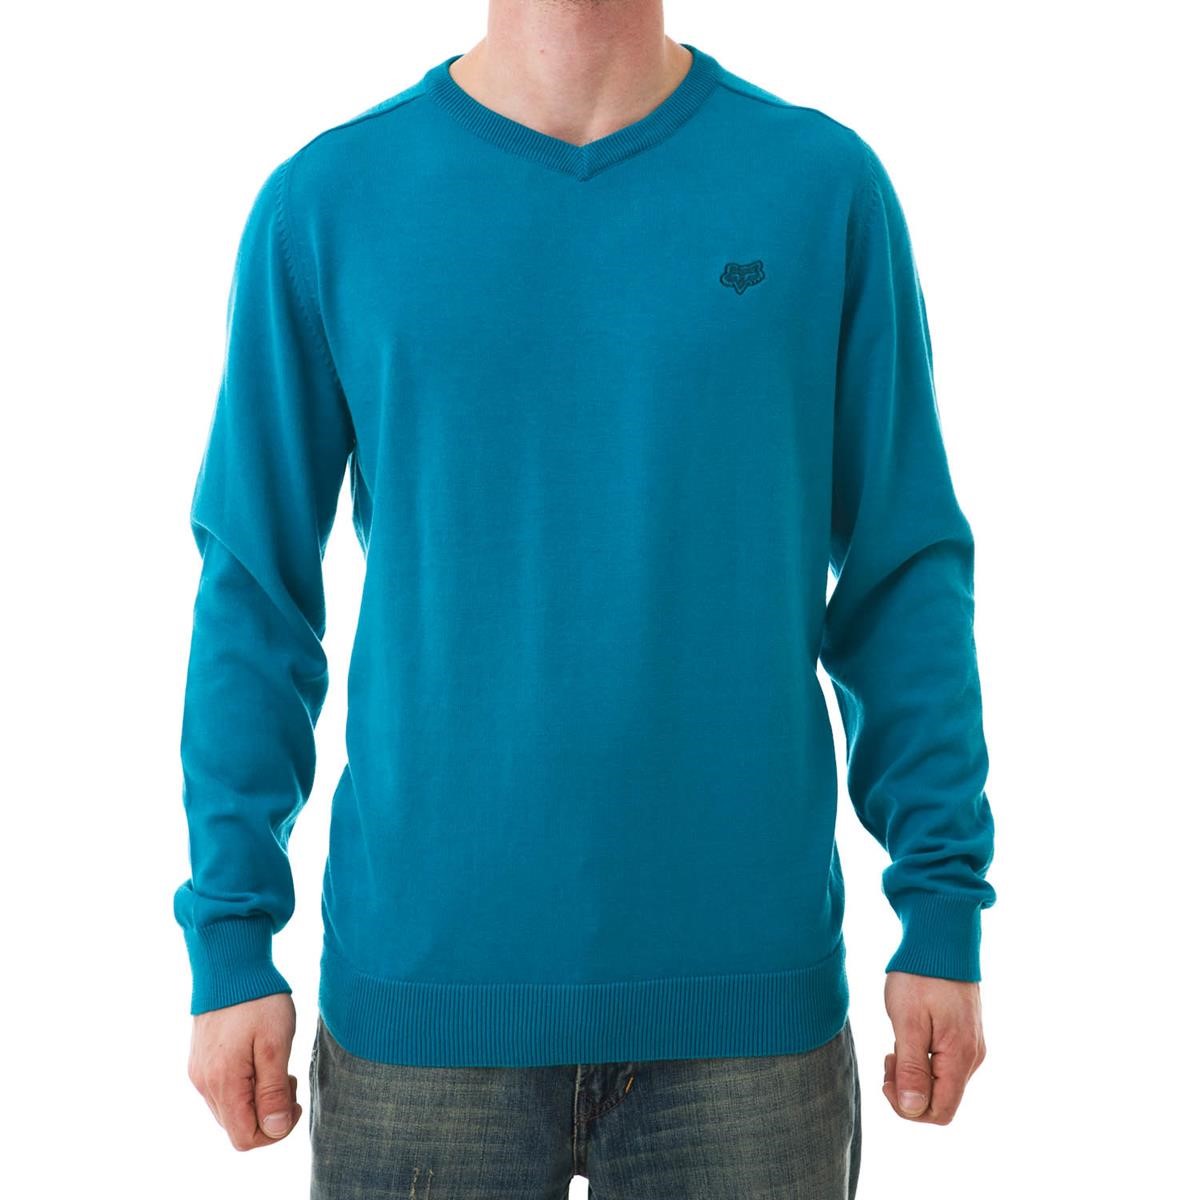 Freizeit/Streetwear Bekleidung-Pullover/Longsleeves - Fox Pullover Mr. Clean Turquoise